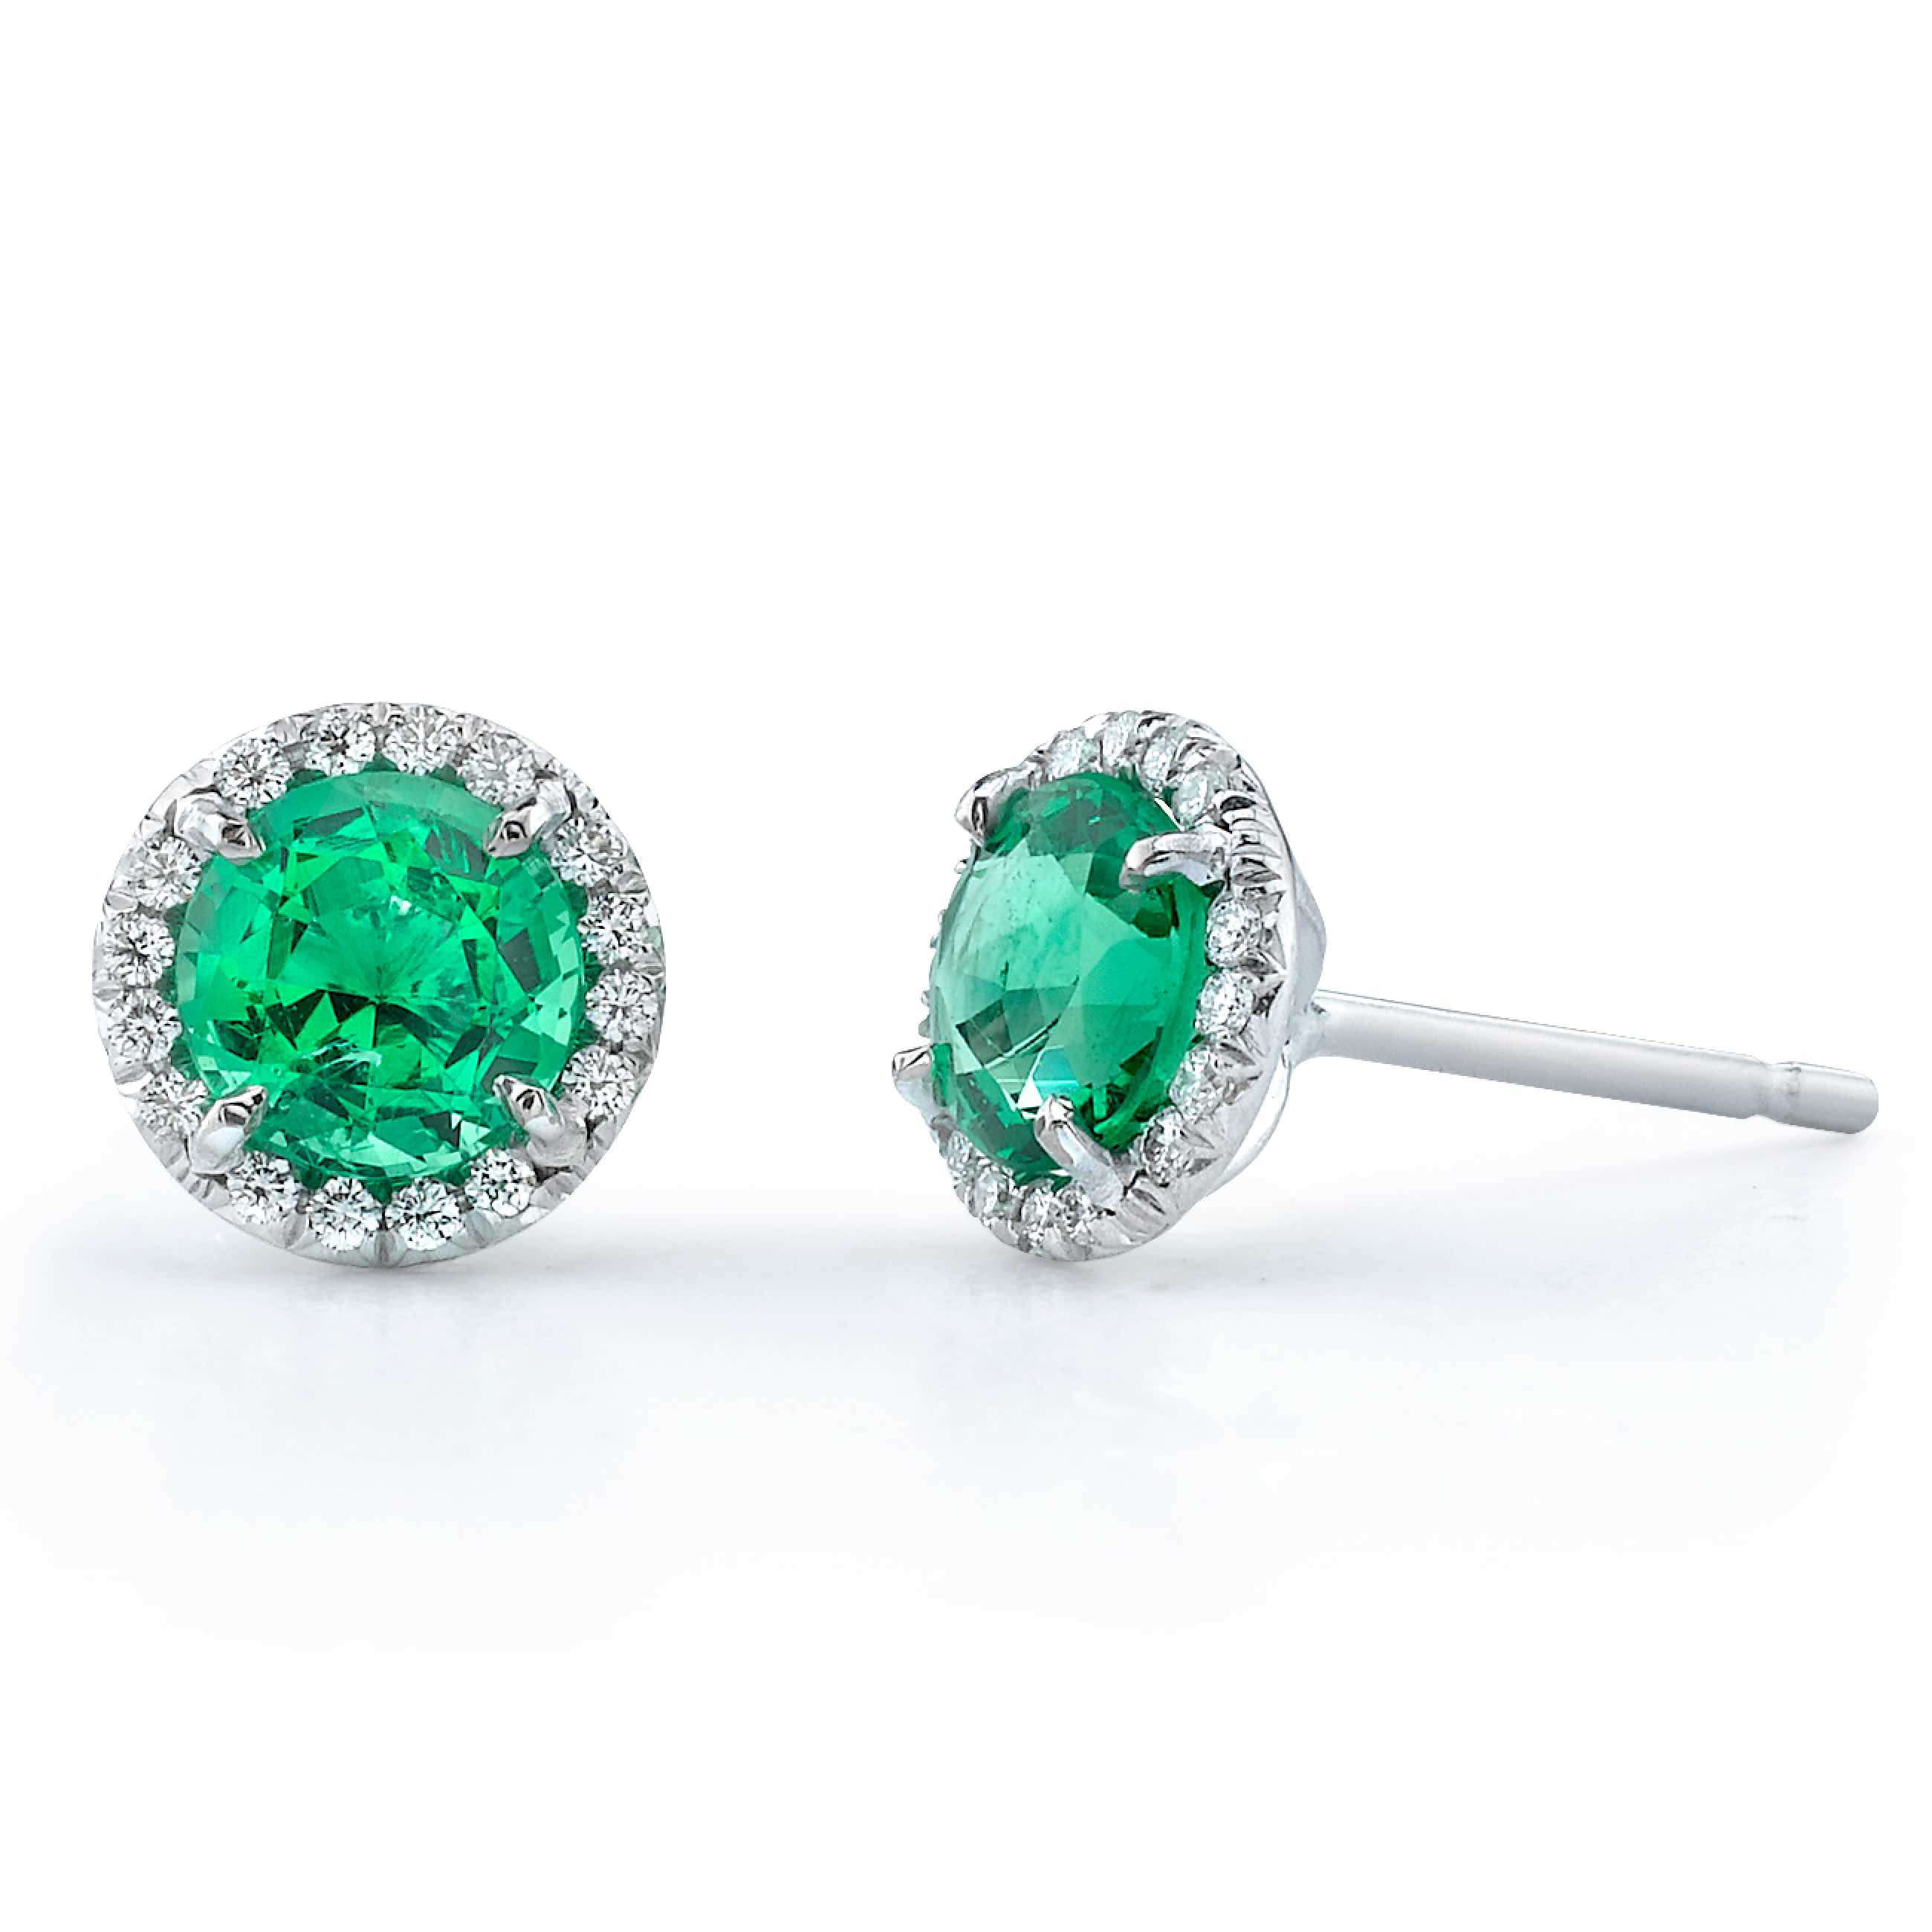 1 2 revised emerald post earrings